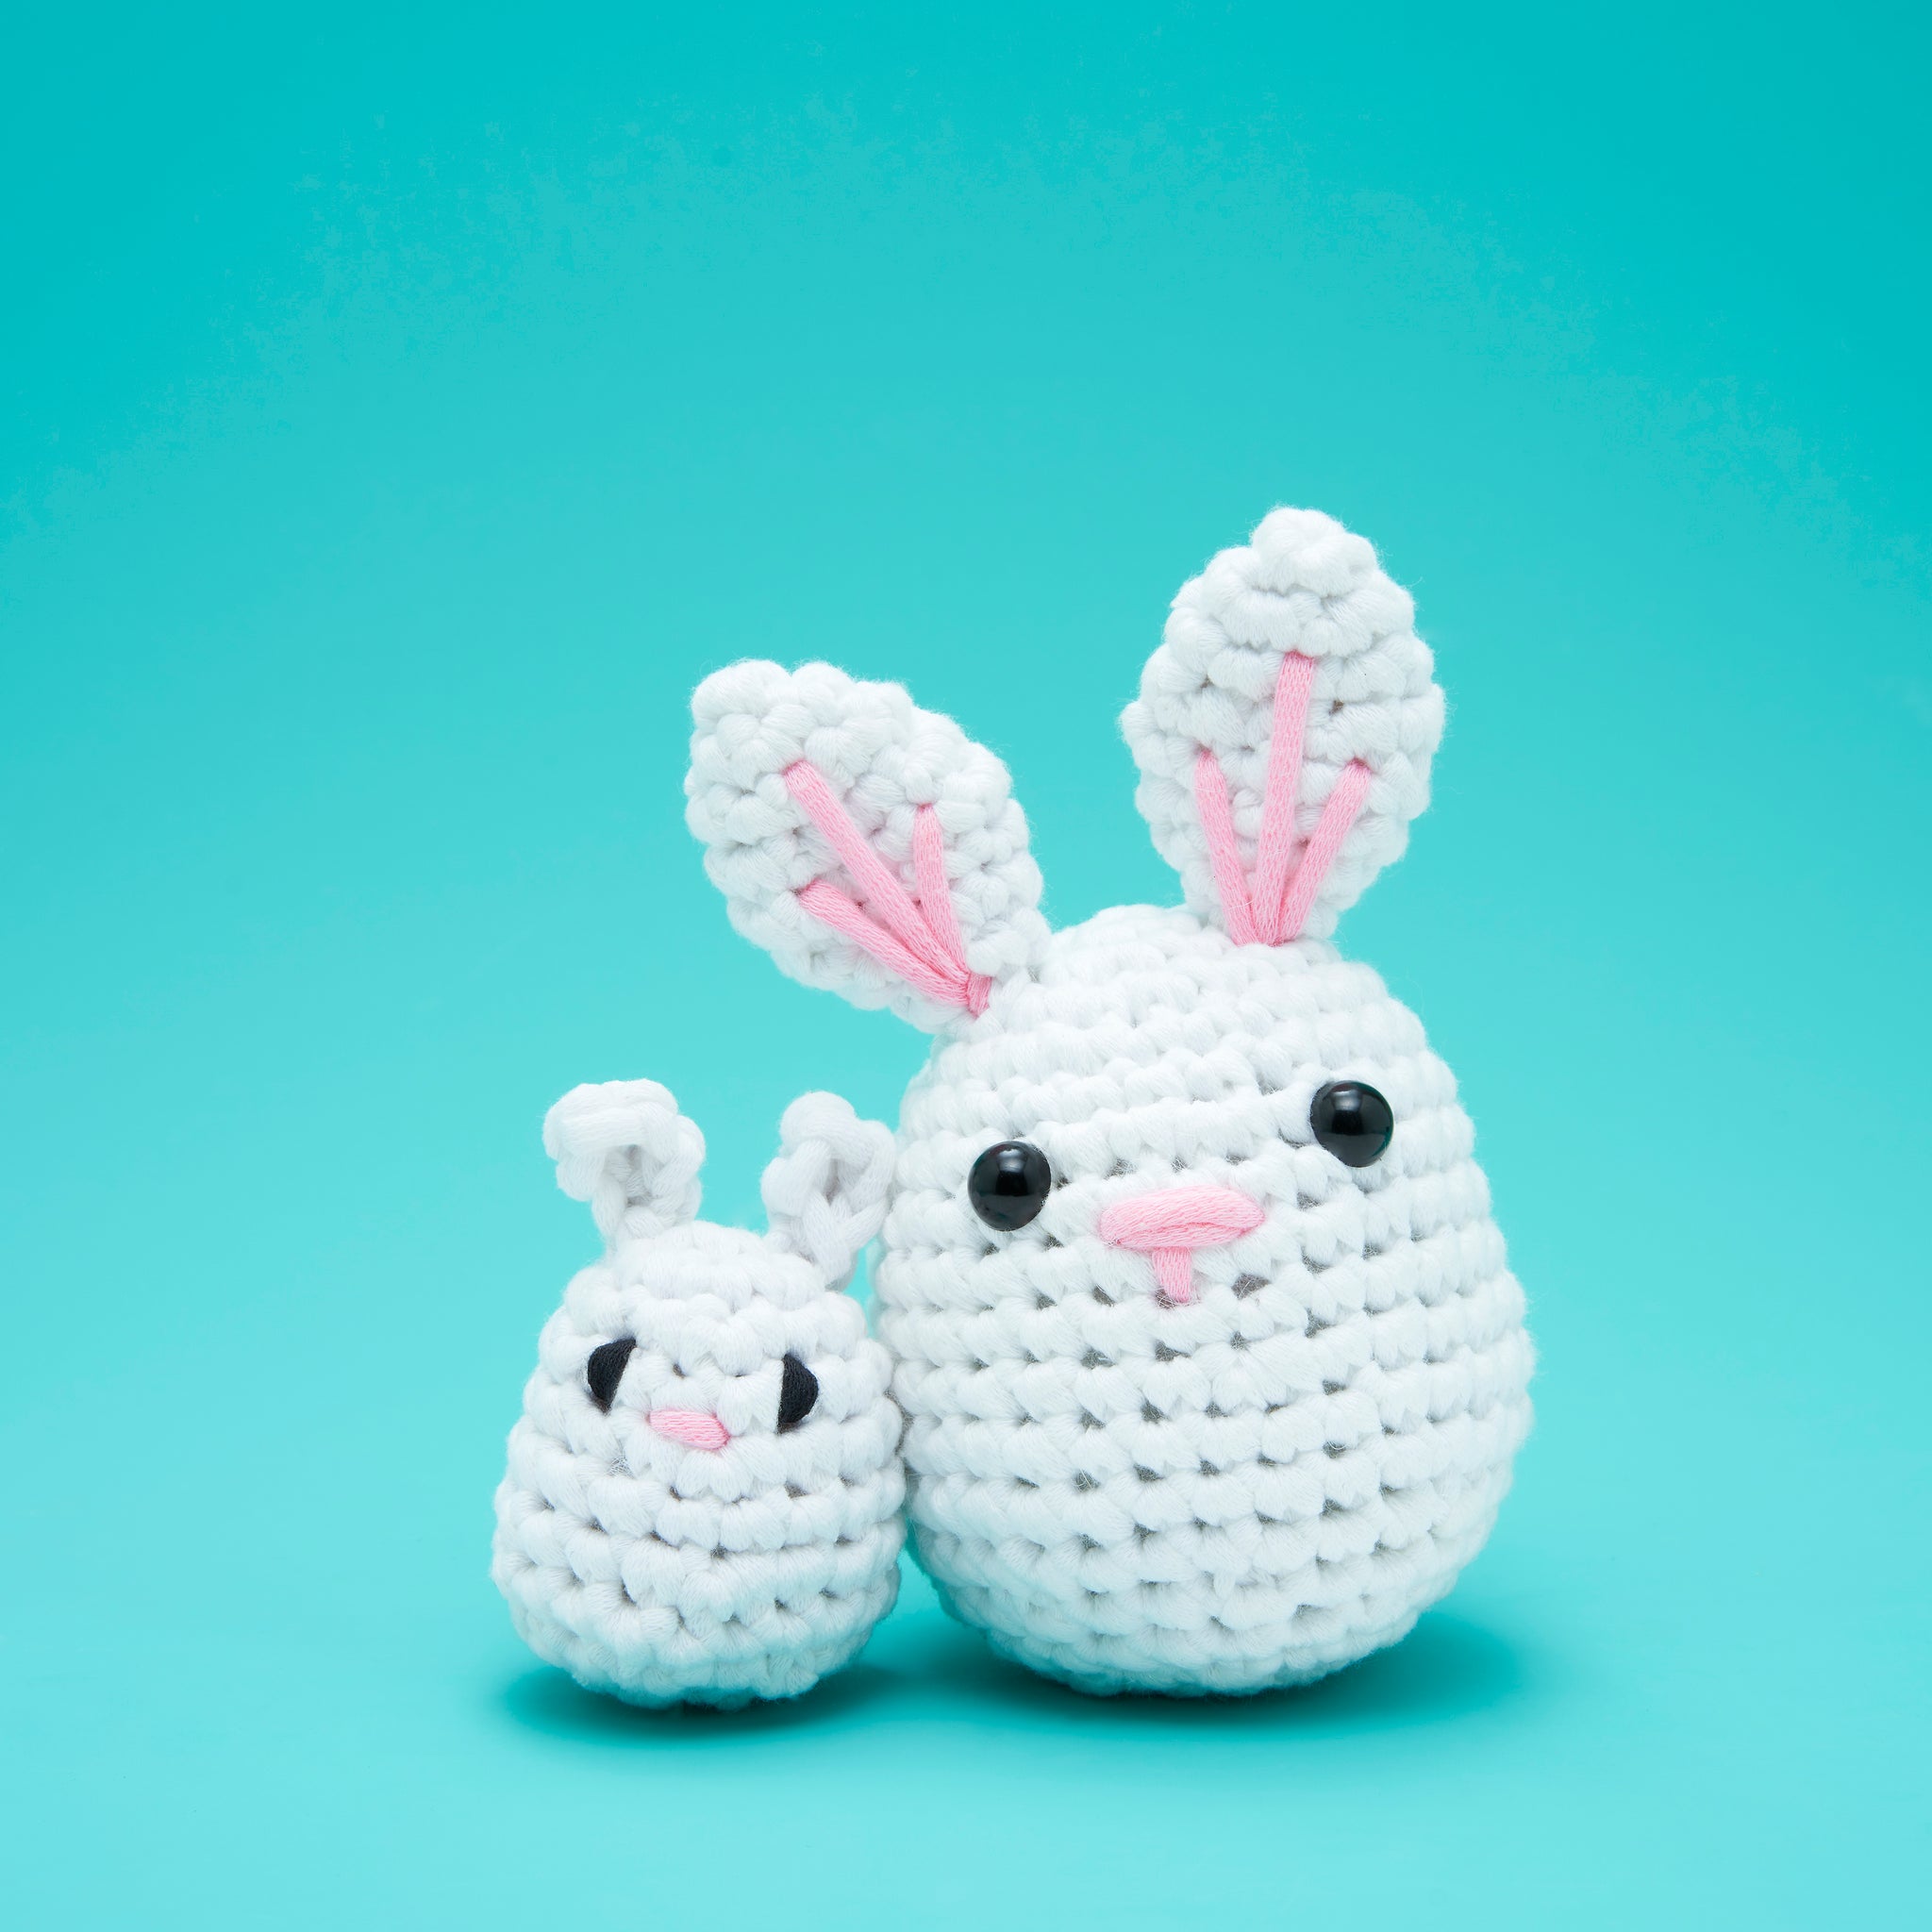 Rabbit Crochet Kits for Beginners - All-in-One Stuffed Animal